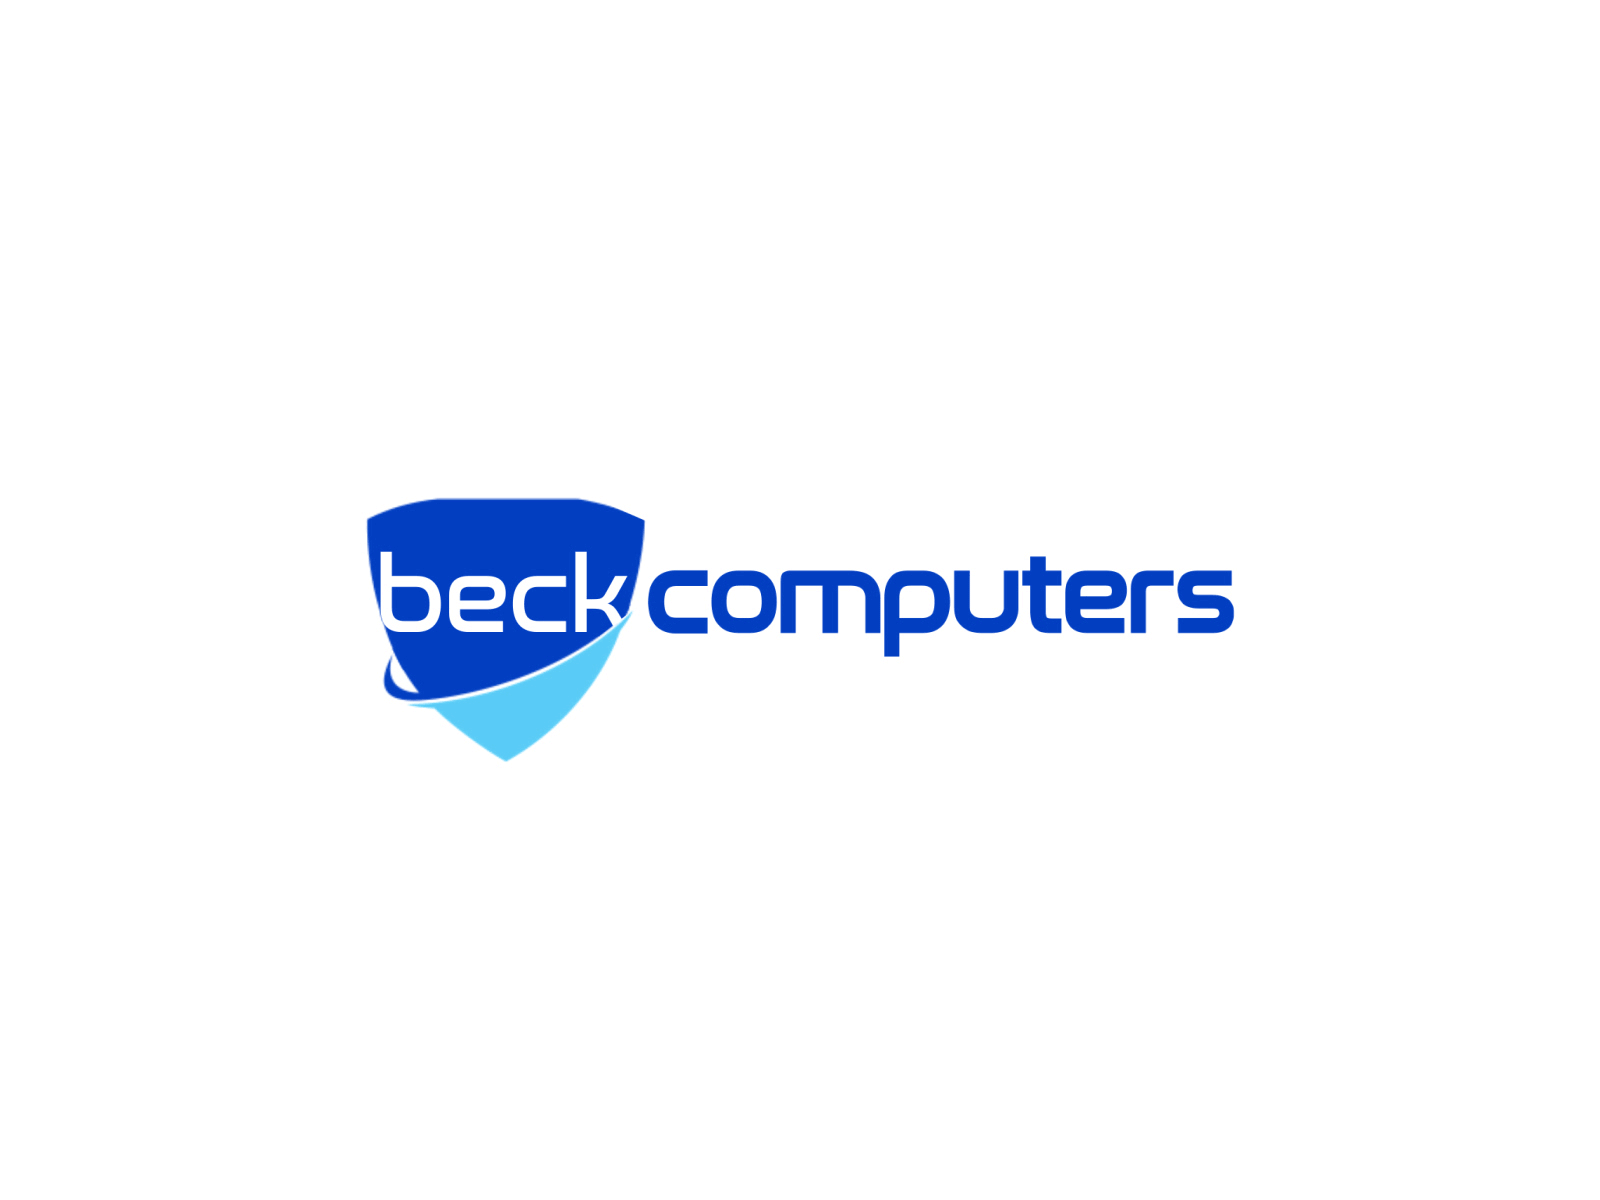 Beck Computers Logo animation (Landscape Version) Motion Graphic